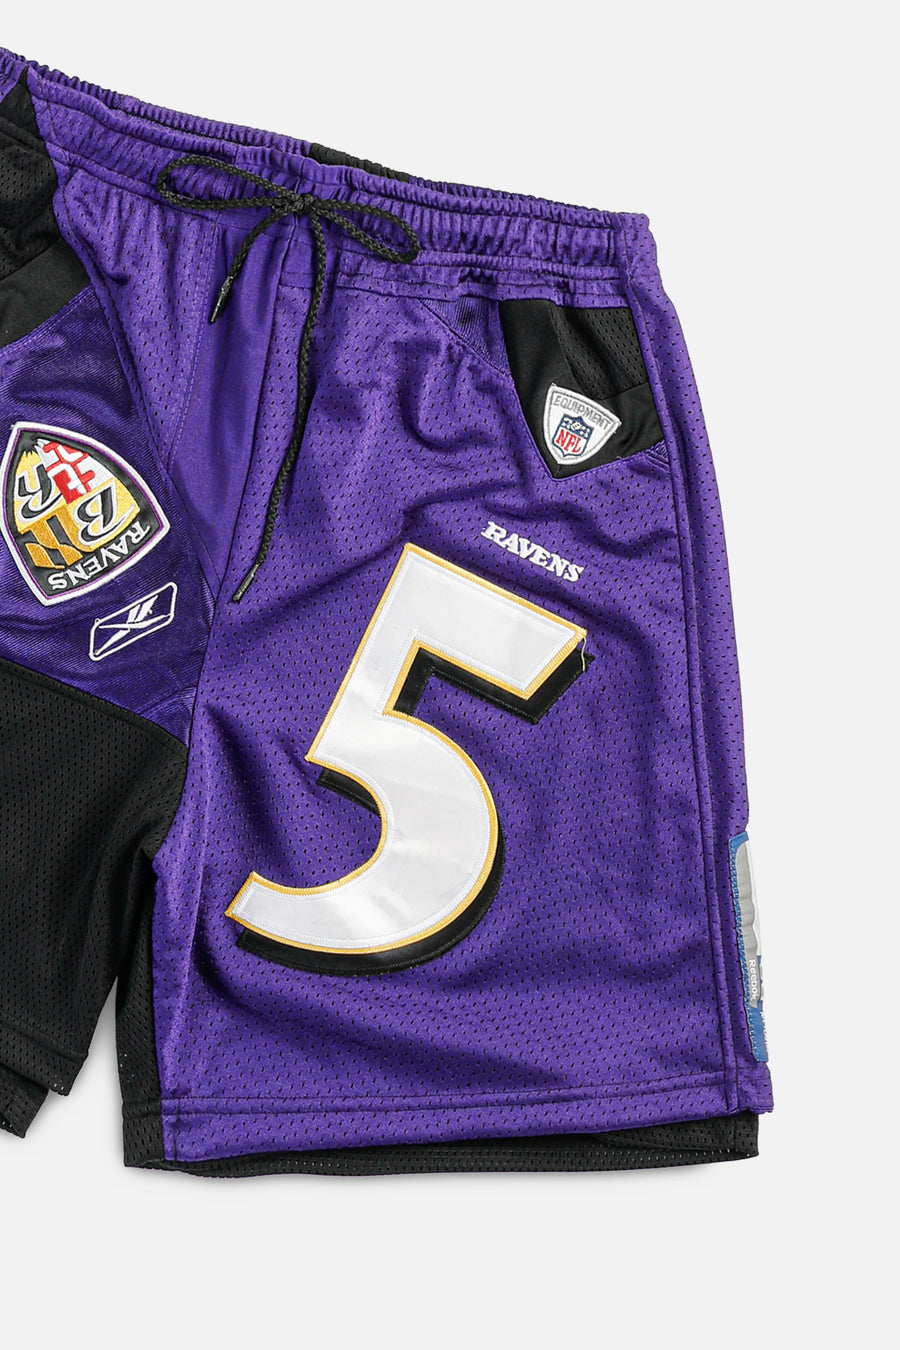 Unisex Rework Baltimore Ravens NFL Jersey Shorts - L